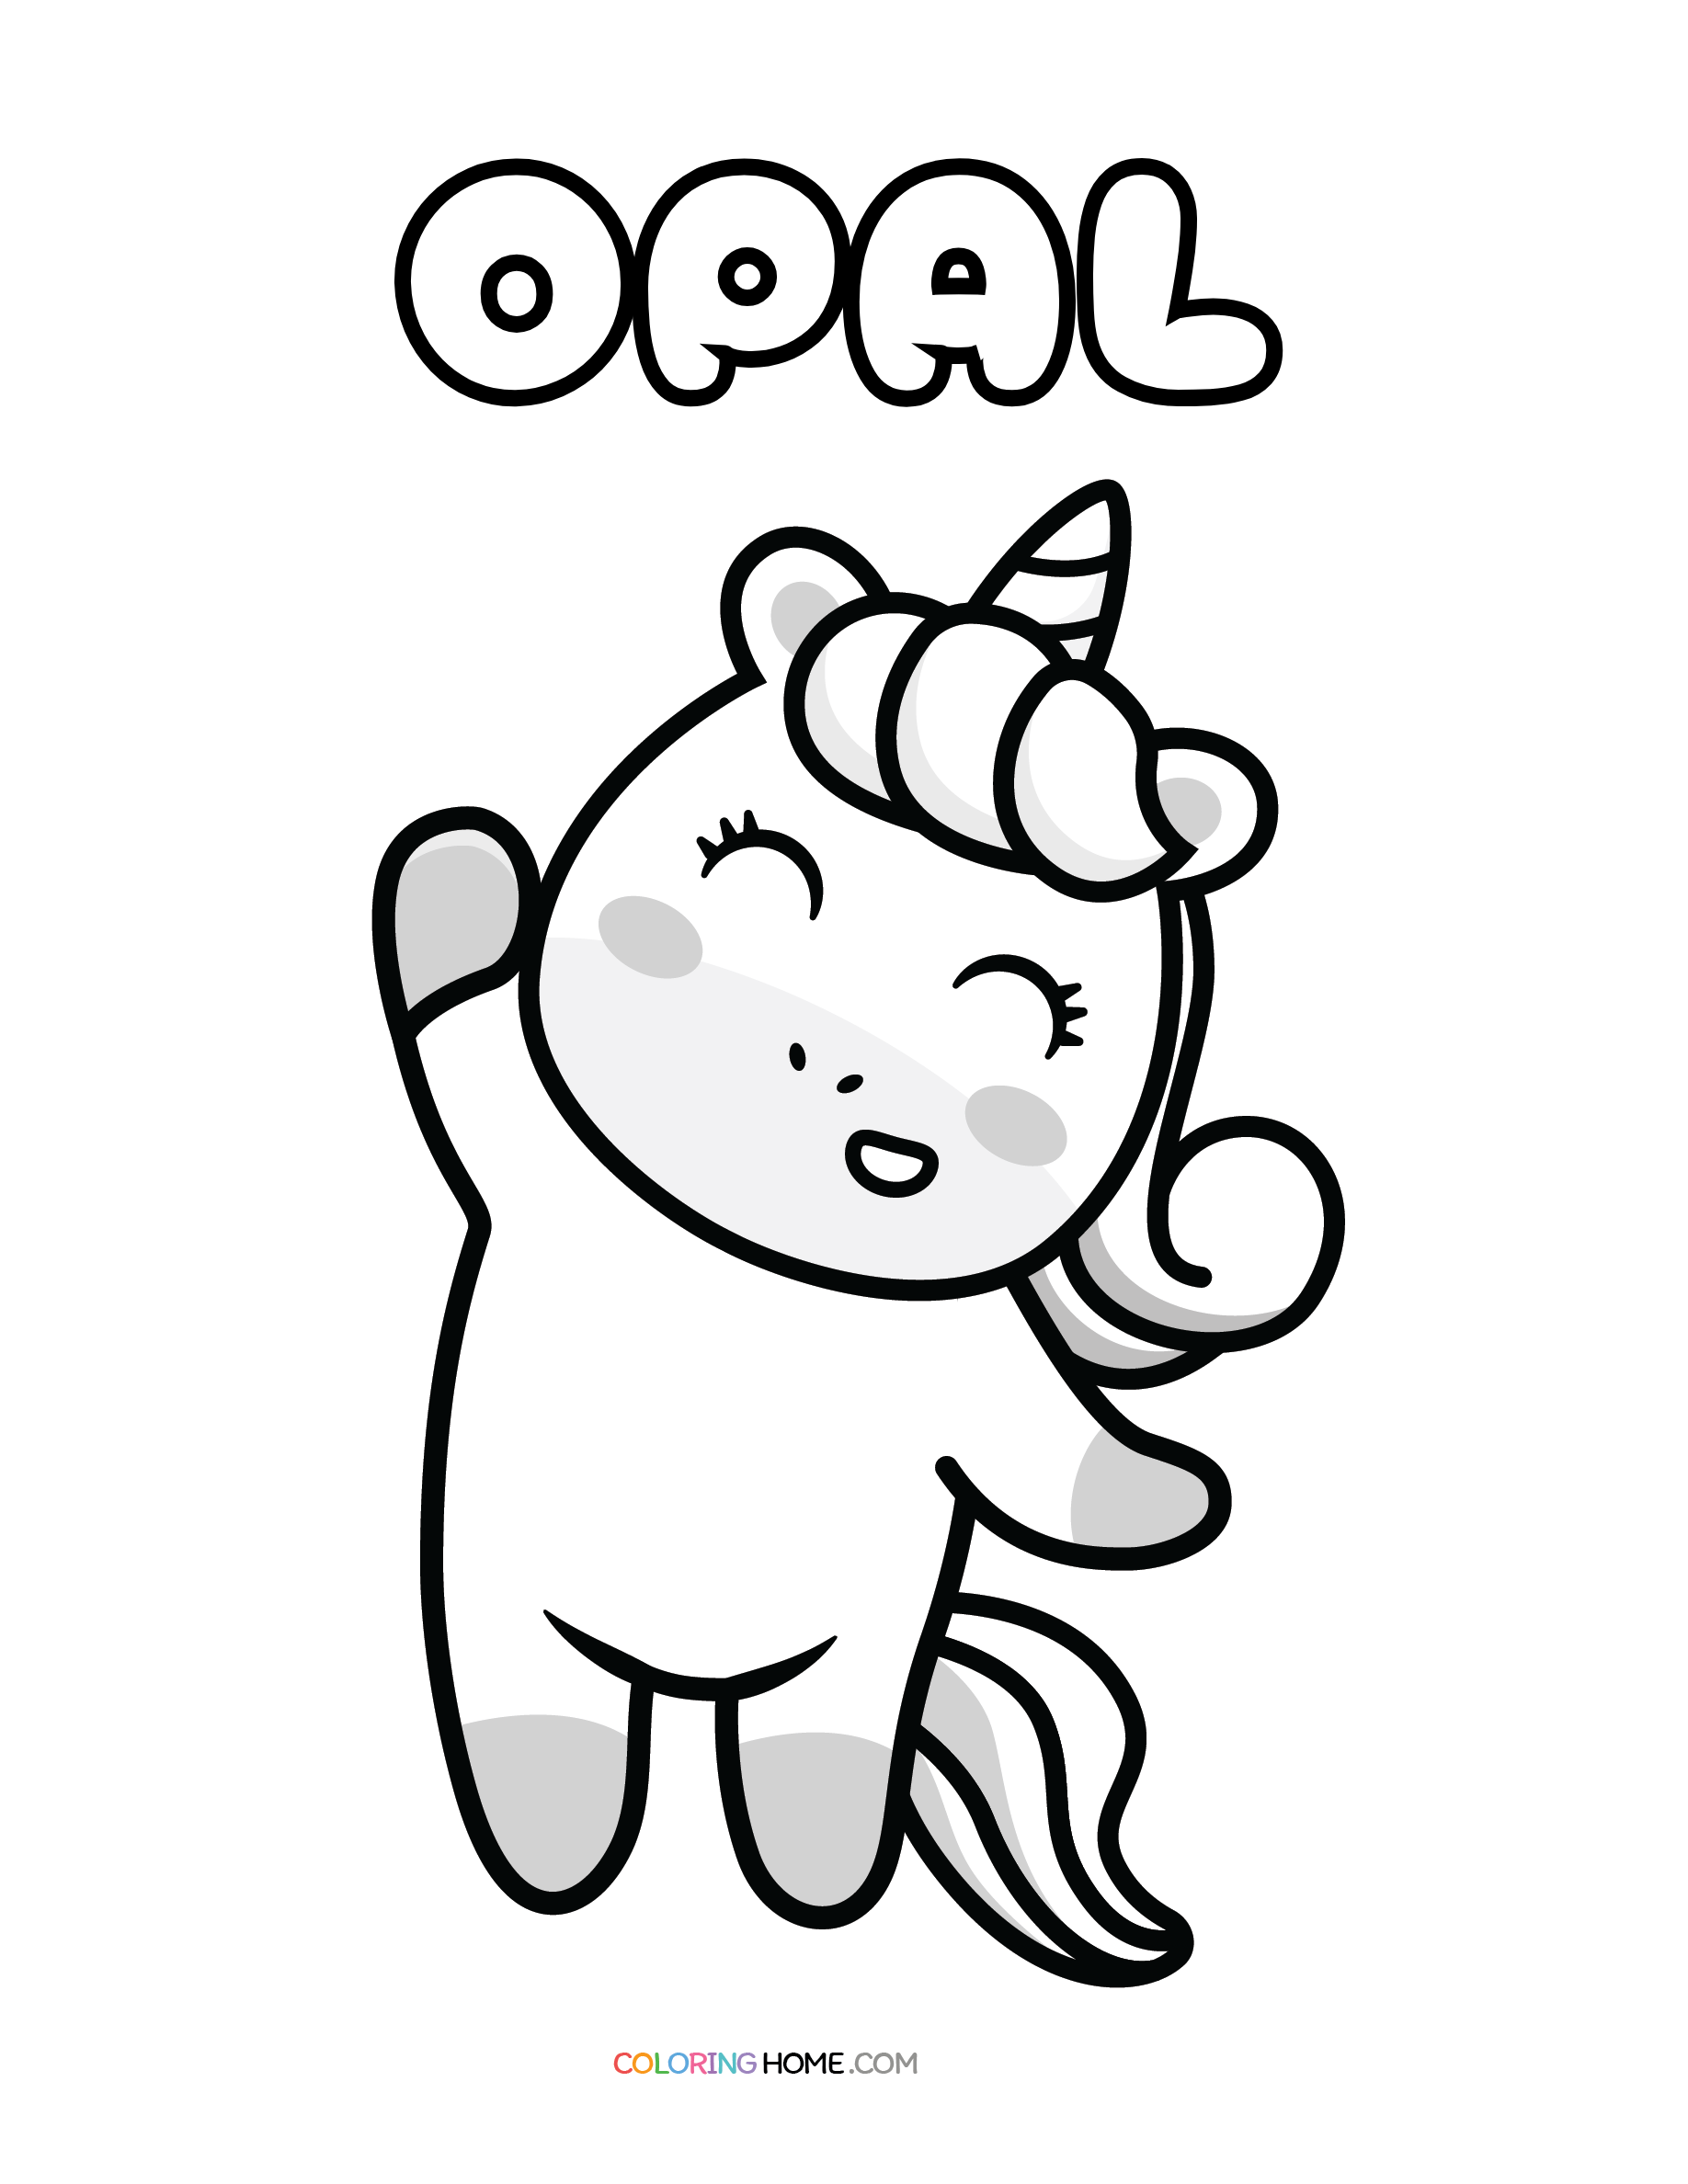 Opal unicorn coloring page